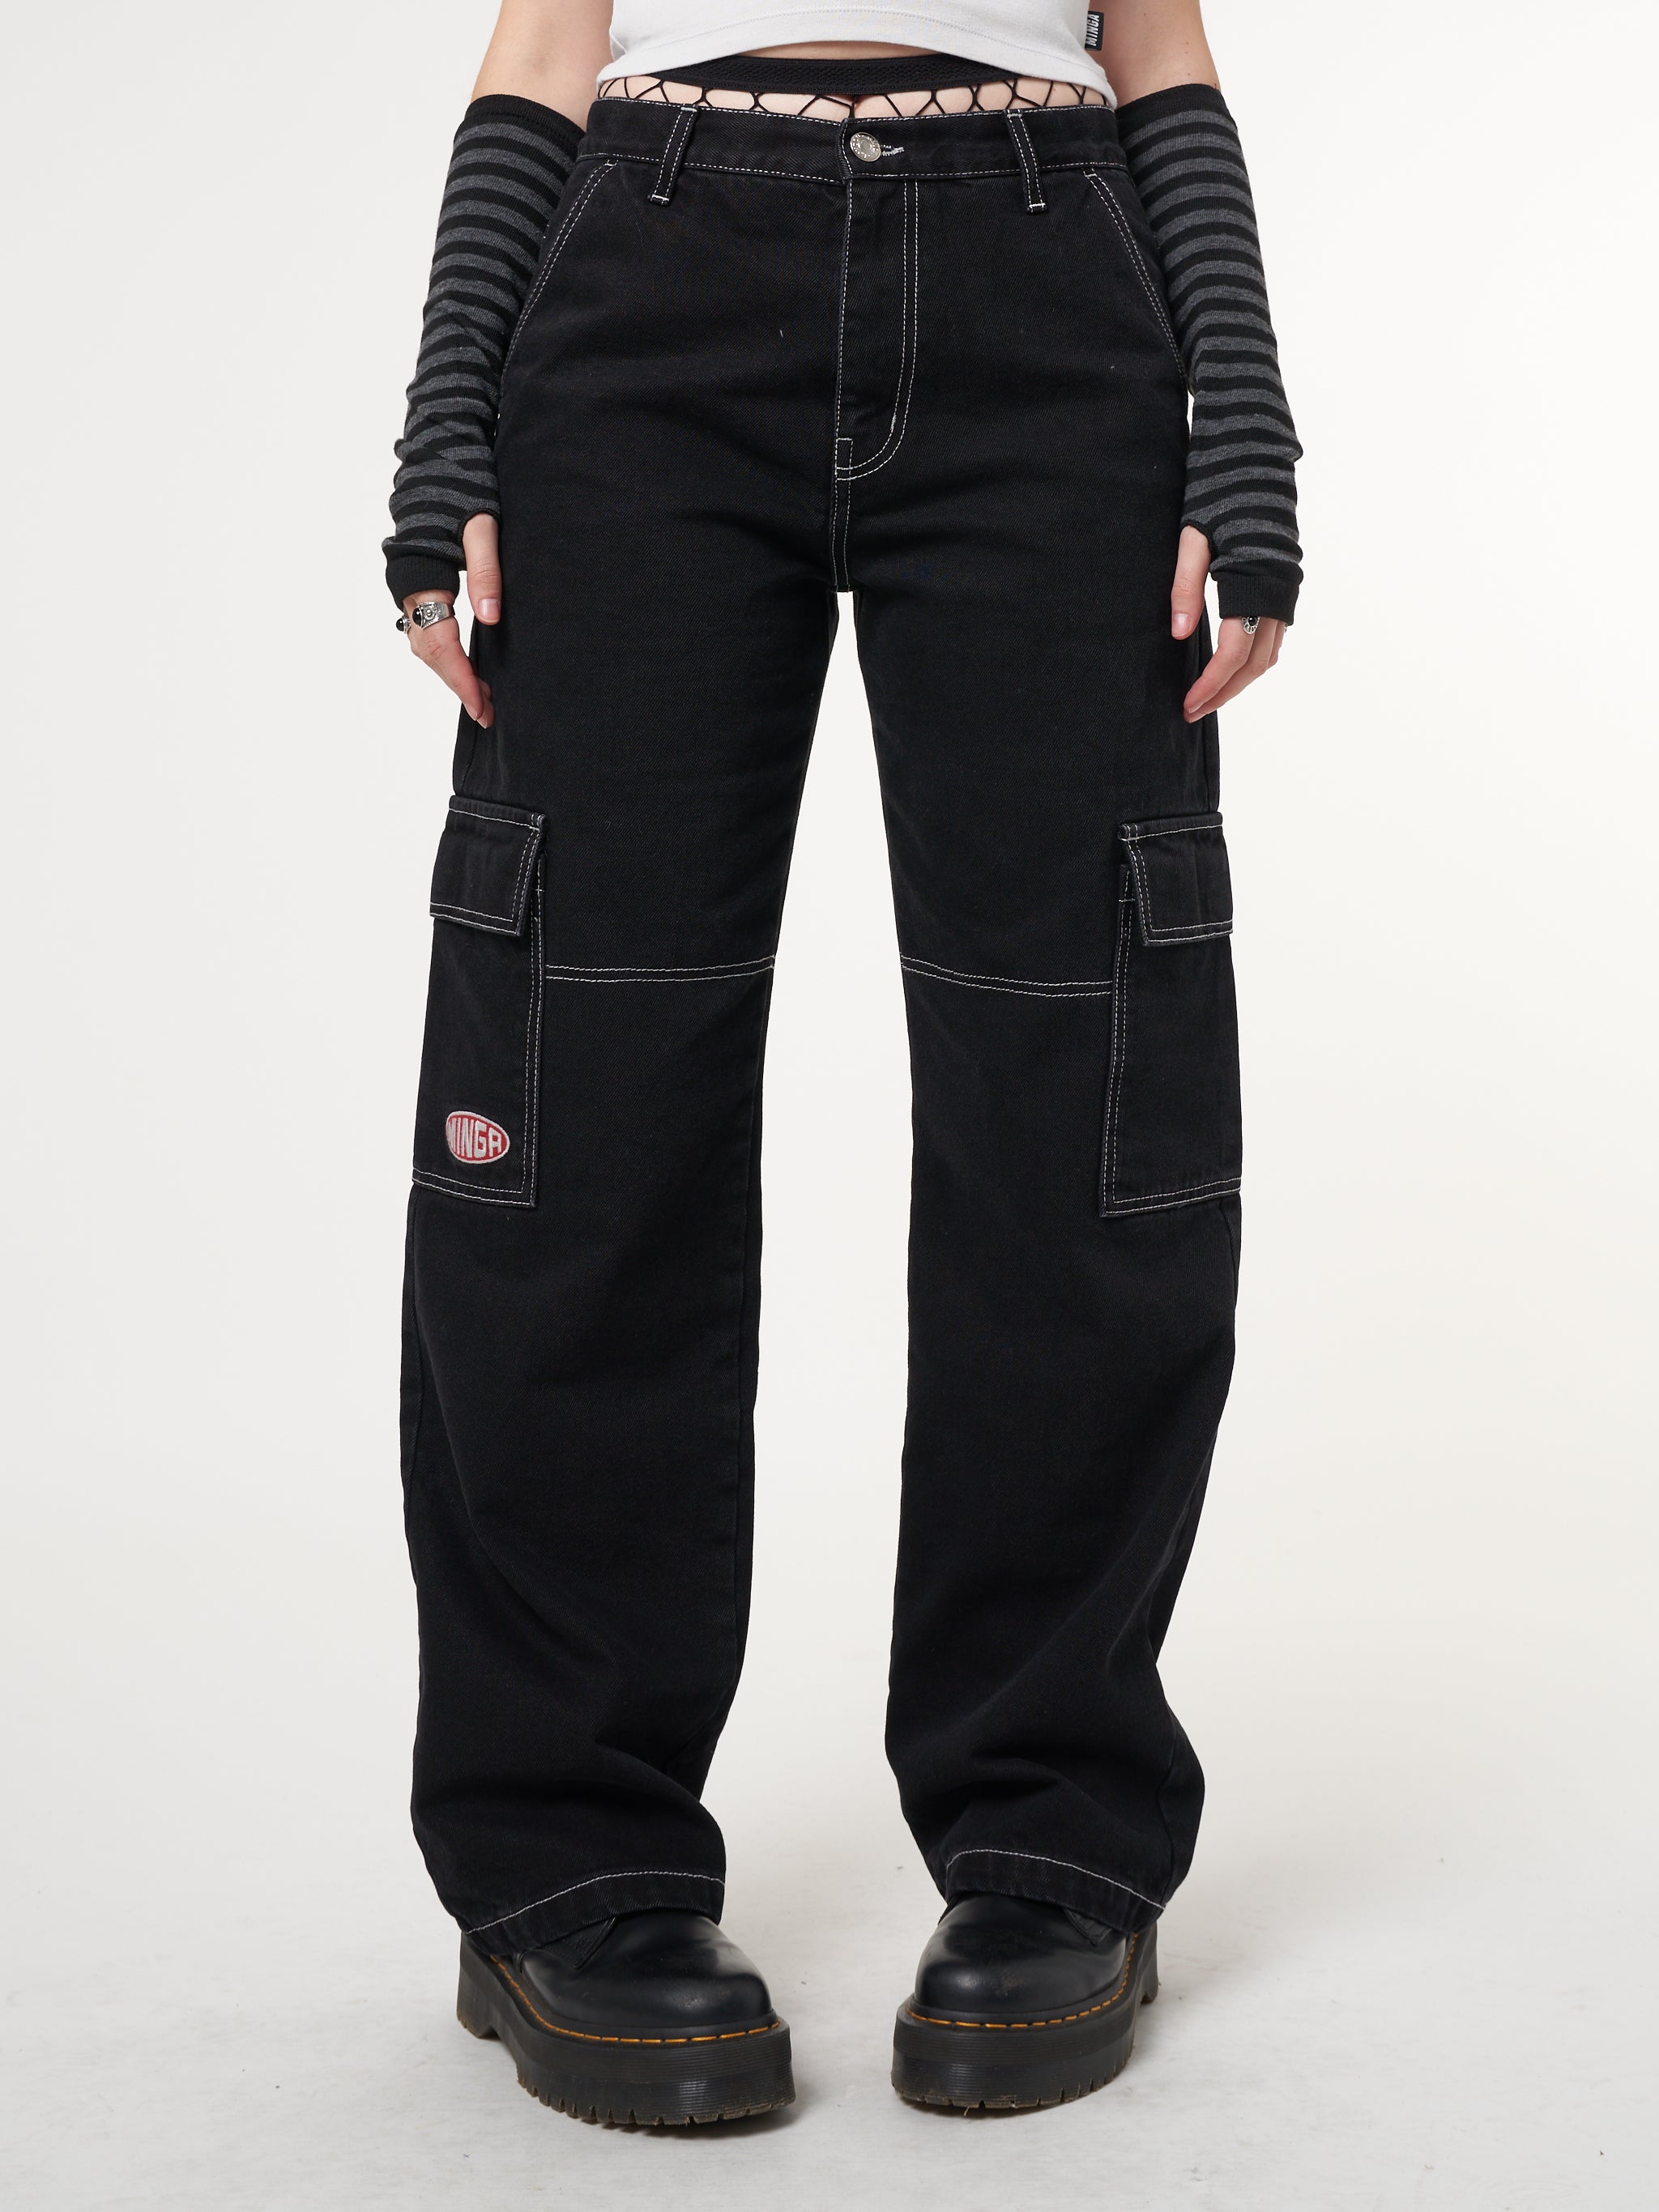 black utility jeans Hot Sale - OFF 67%